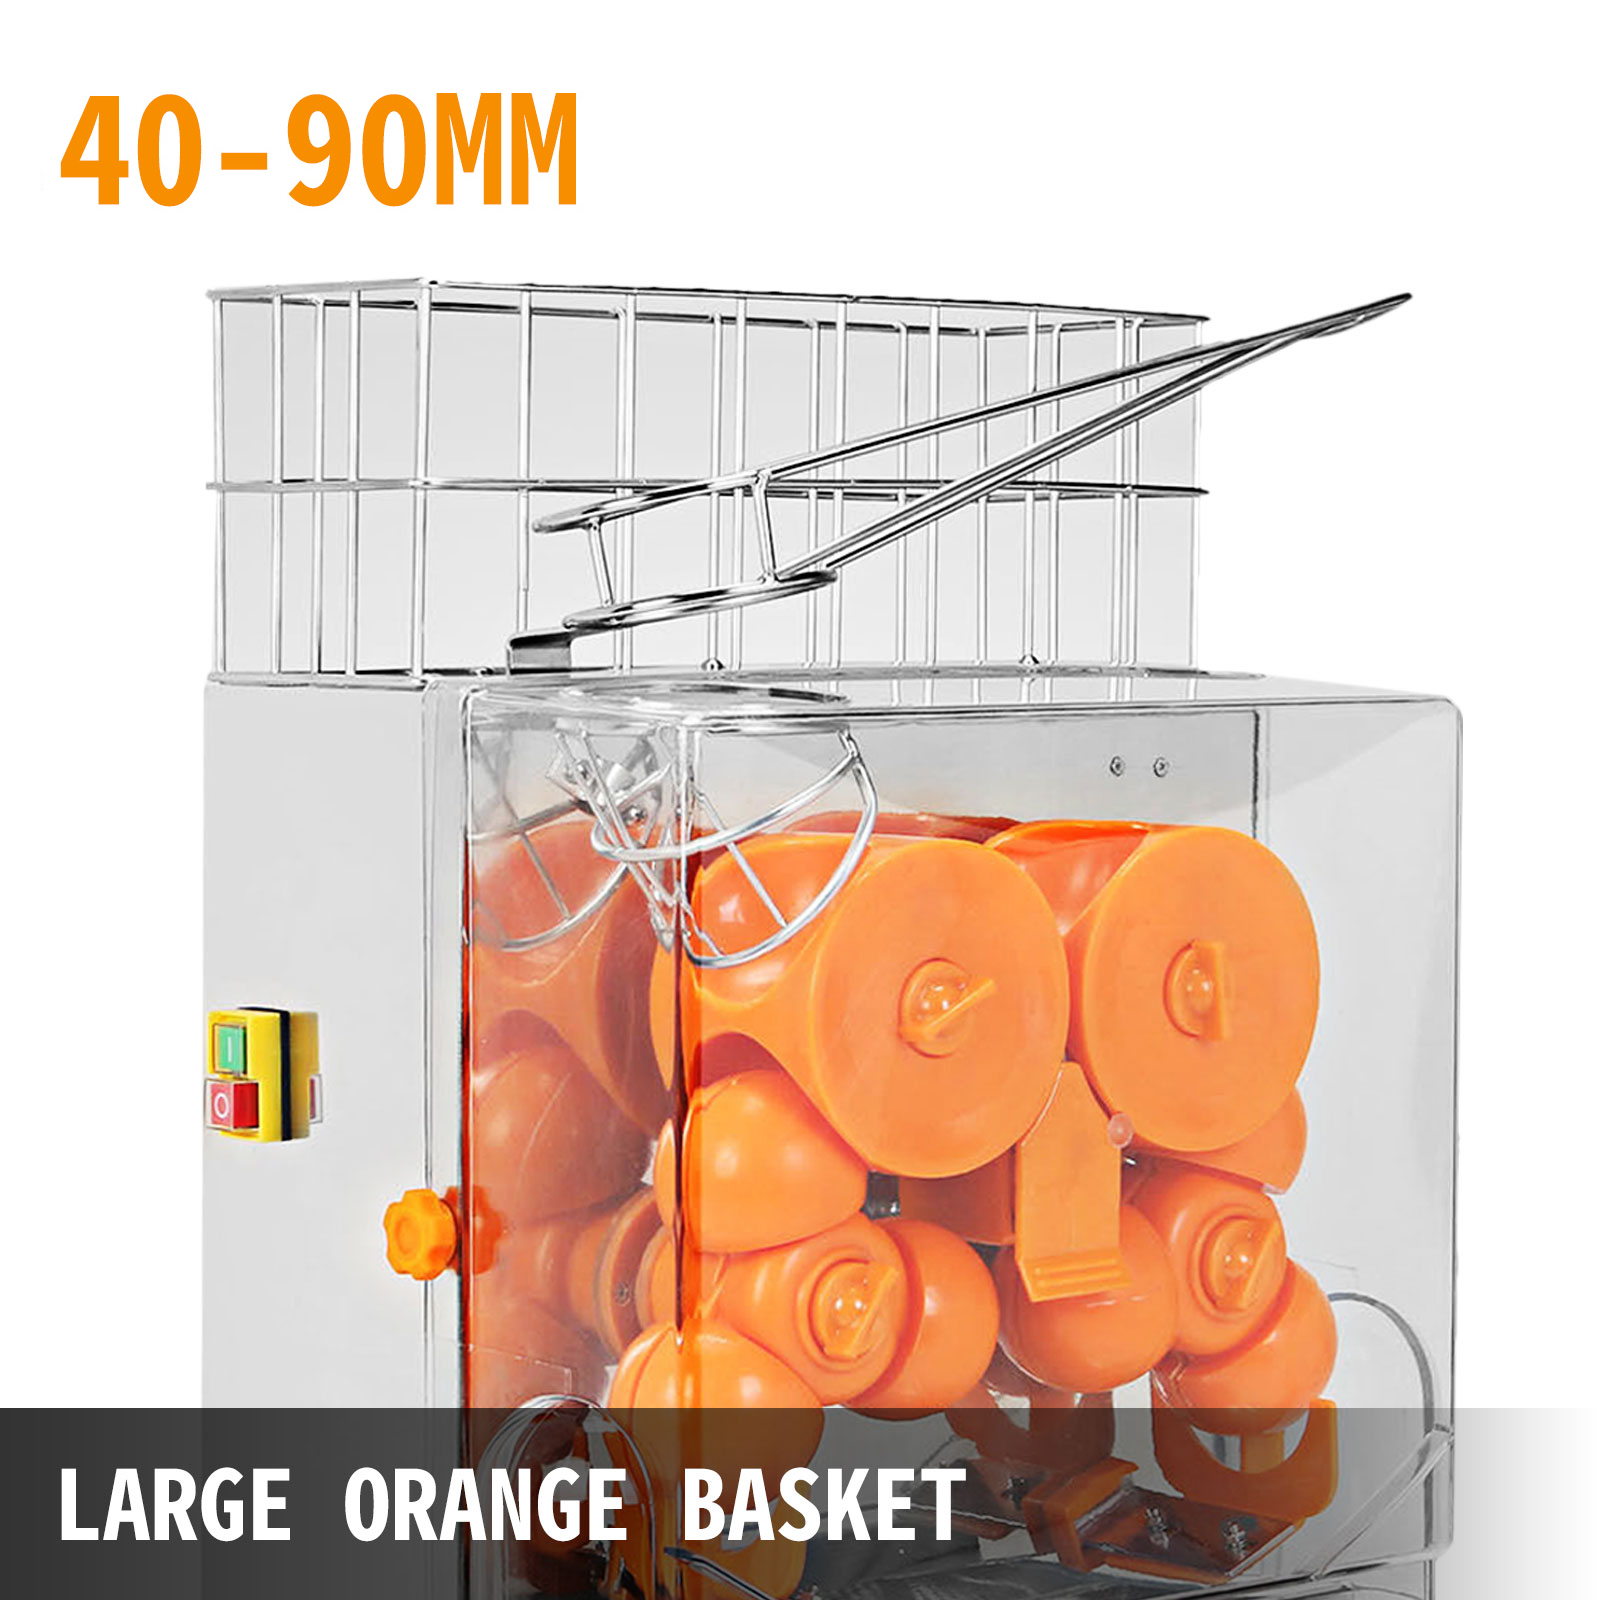 VEVOR Máquina exprimidora comercial VEVOR, extractor de jugo de 110 V,  exprimidor de naranja de 120 W para 22-30 por minuto, máquina eléctrica de  jugo de naranja con caja de filtro extraíble